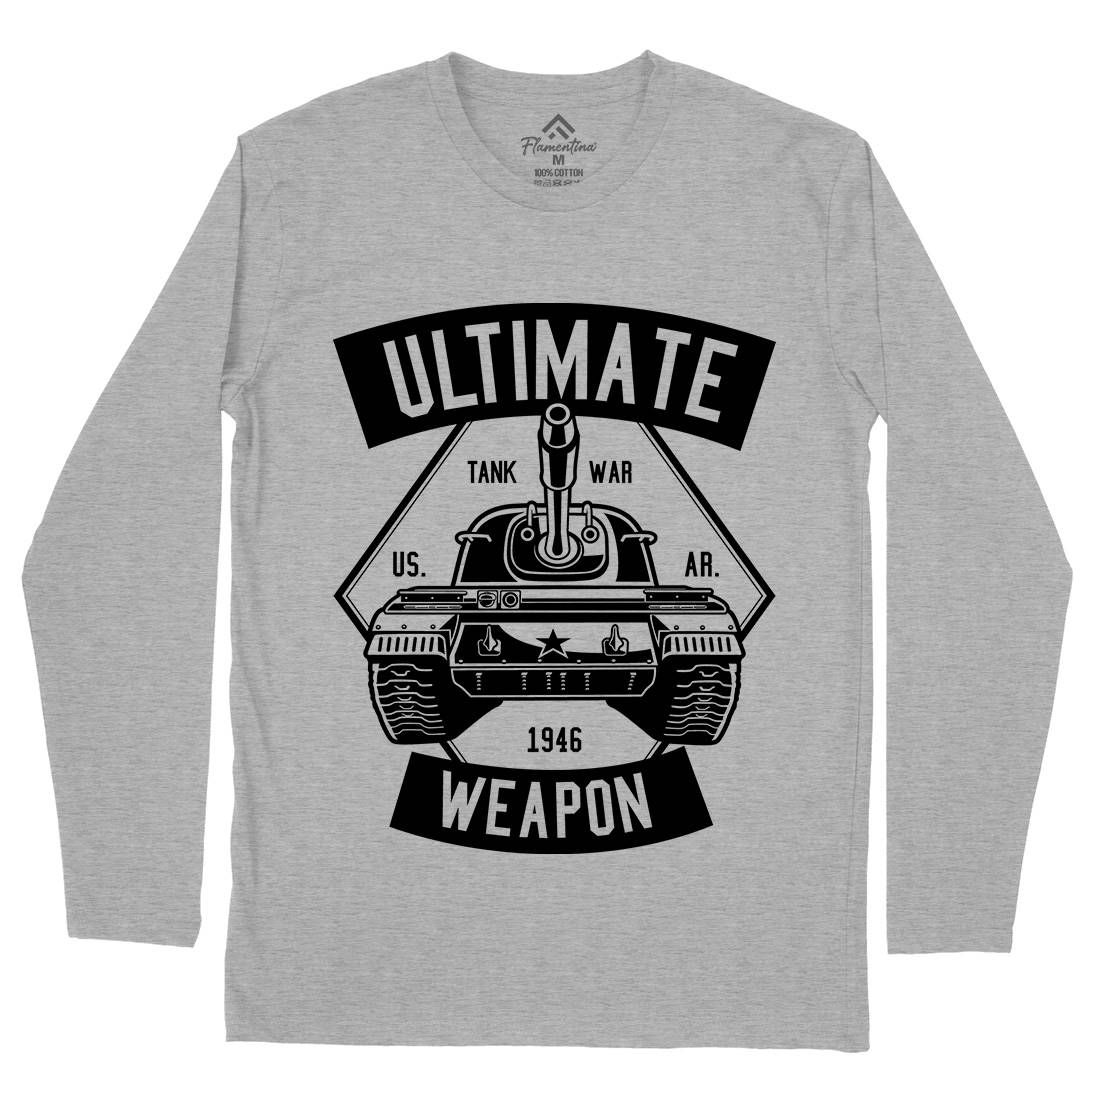 Tank War Ultimate Weapon Mens Long Sleeve T-Shirt Army B649